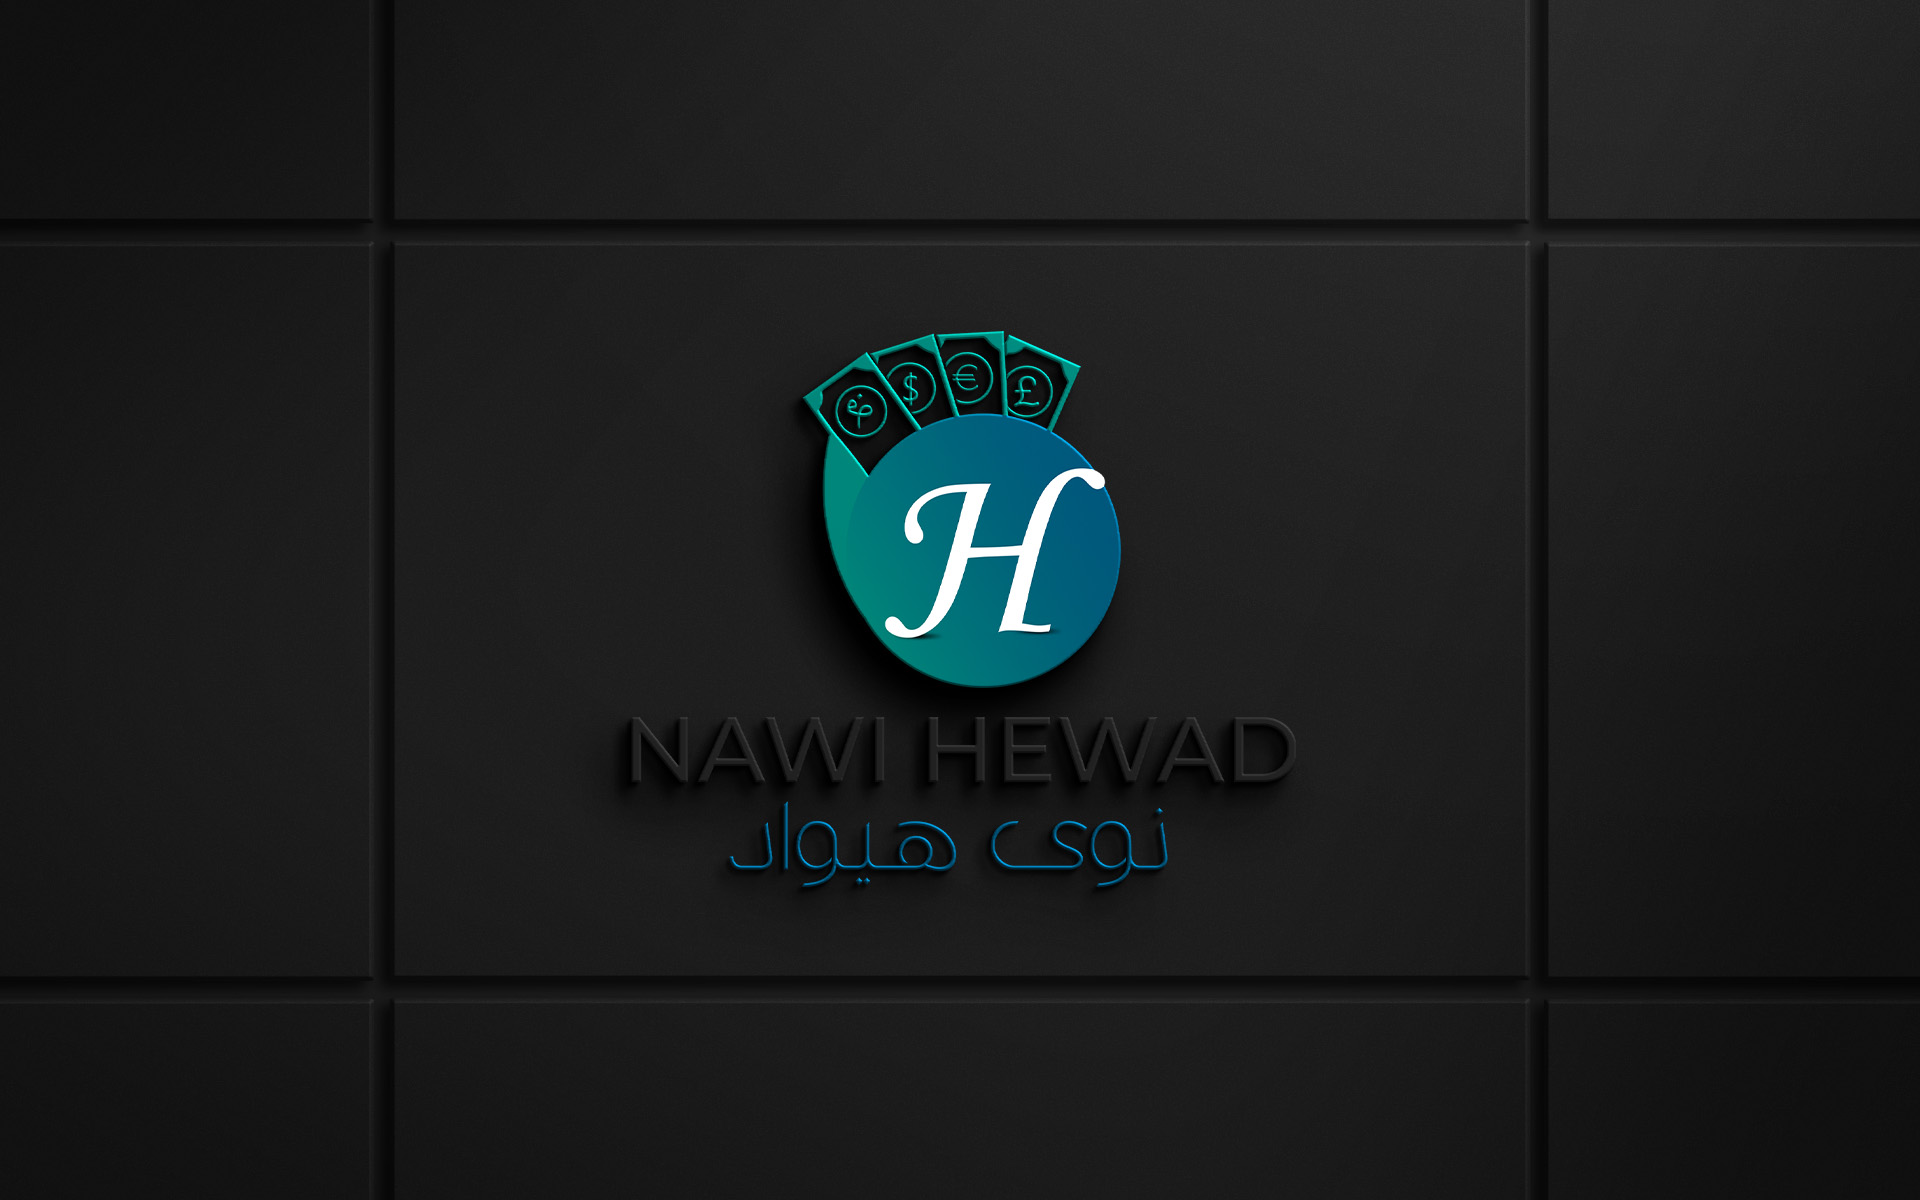 Nawi Hewad